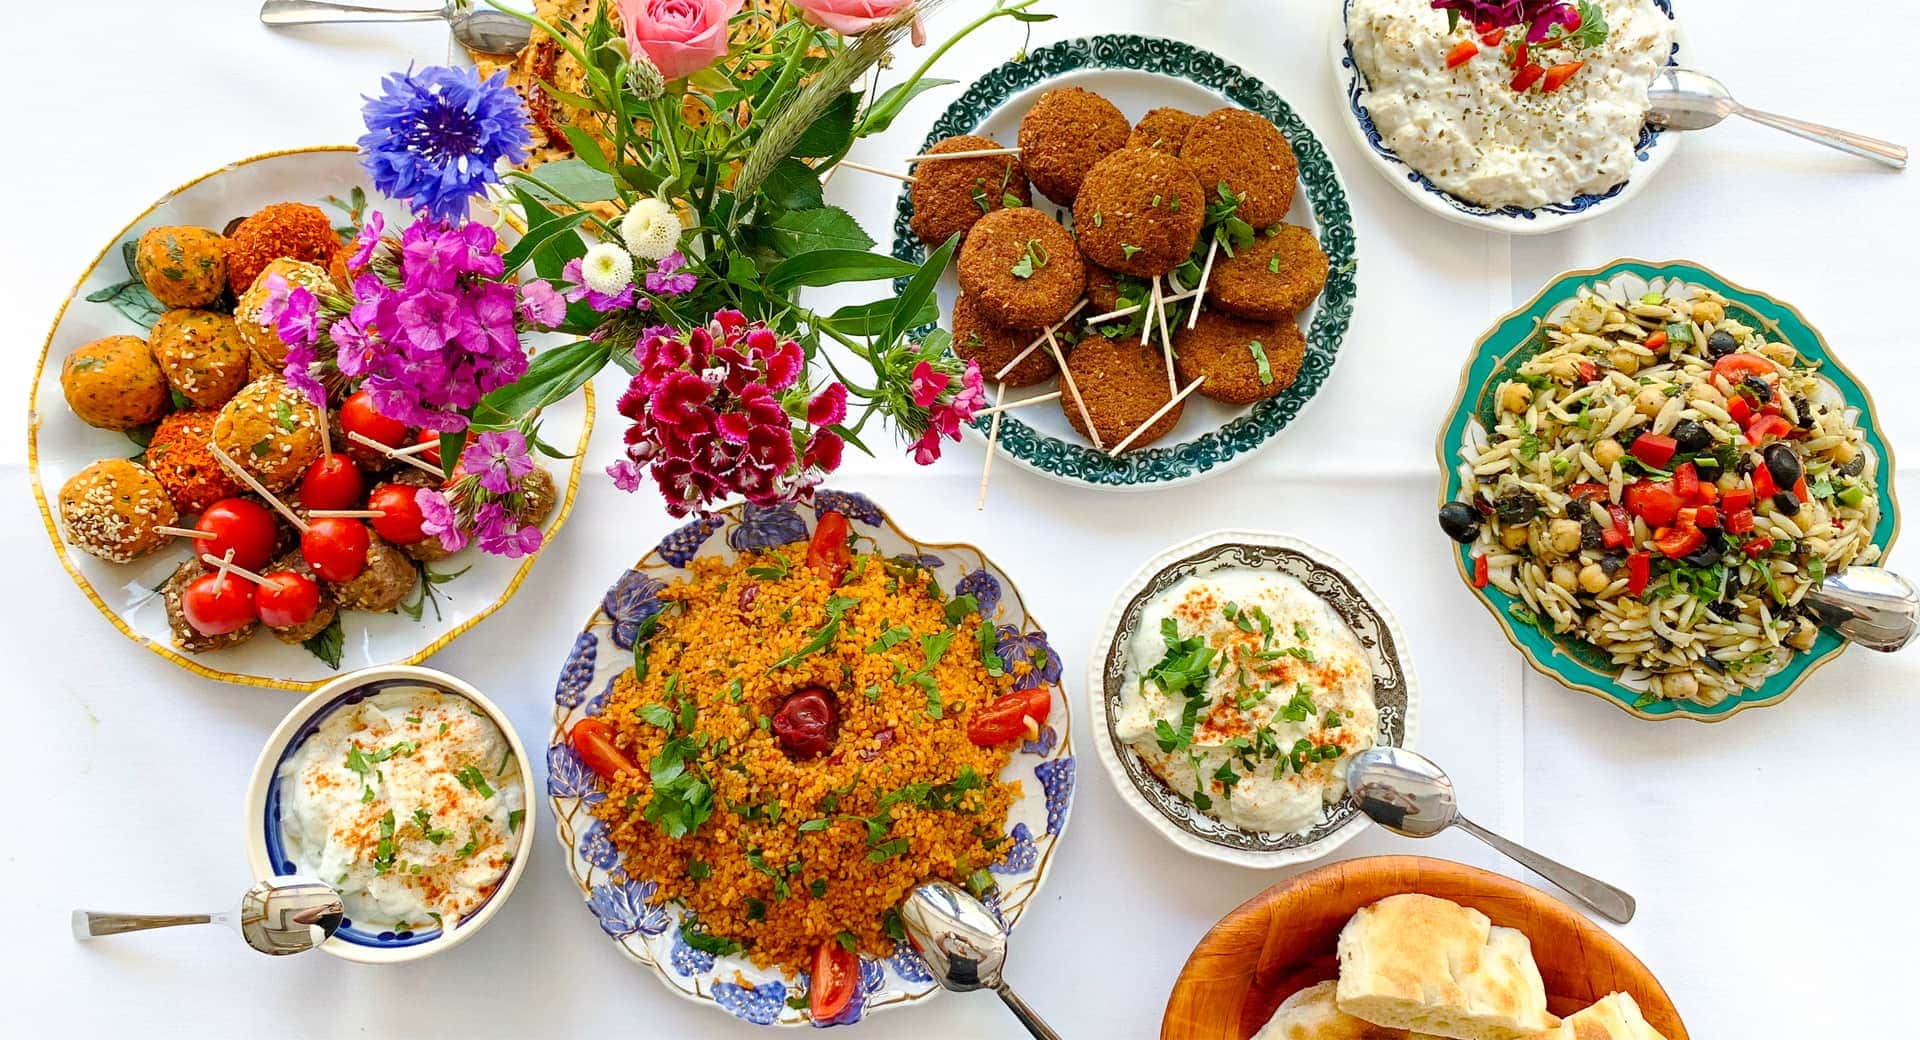 Mediterranes Buffet mit Humus, Falafel, Salat, Brot und Dips